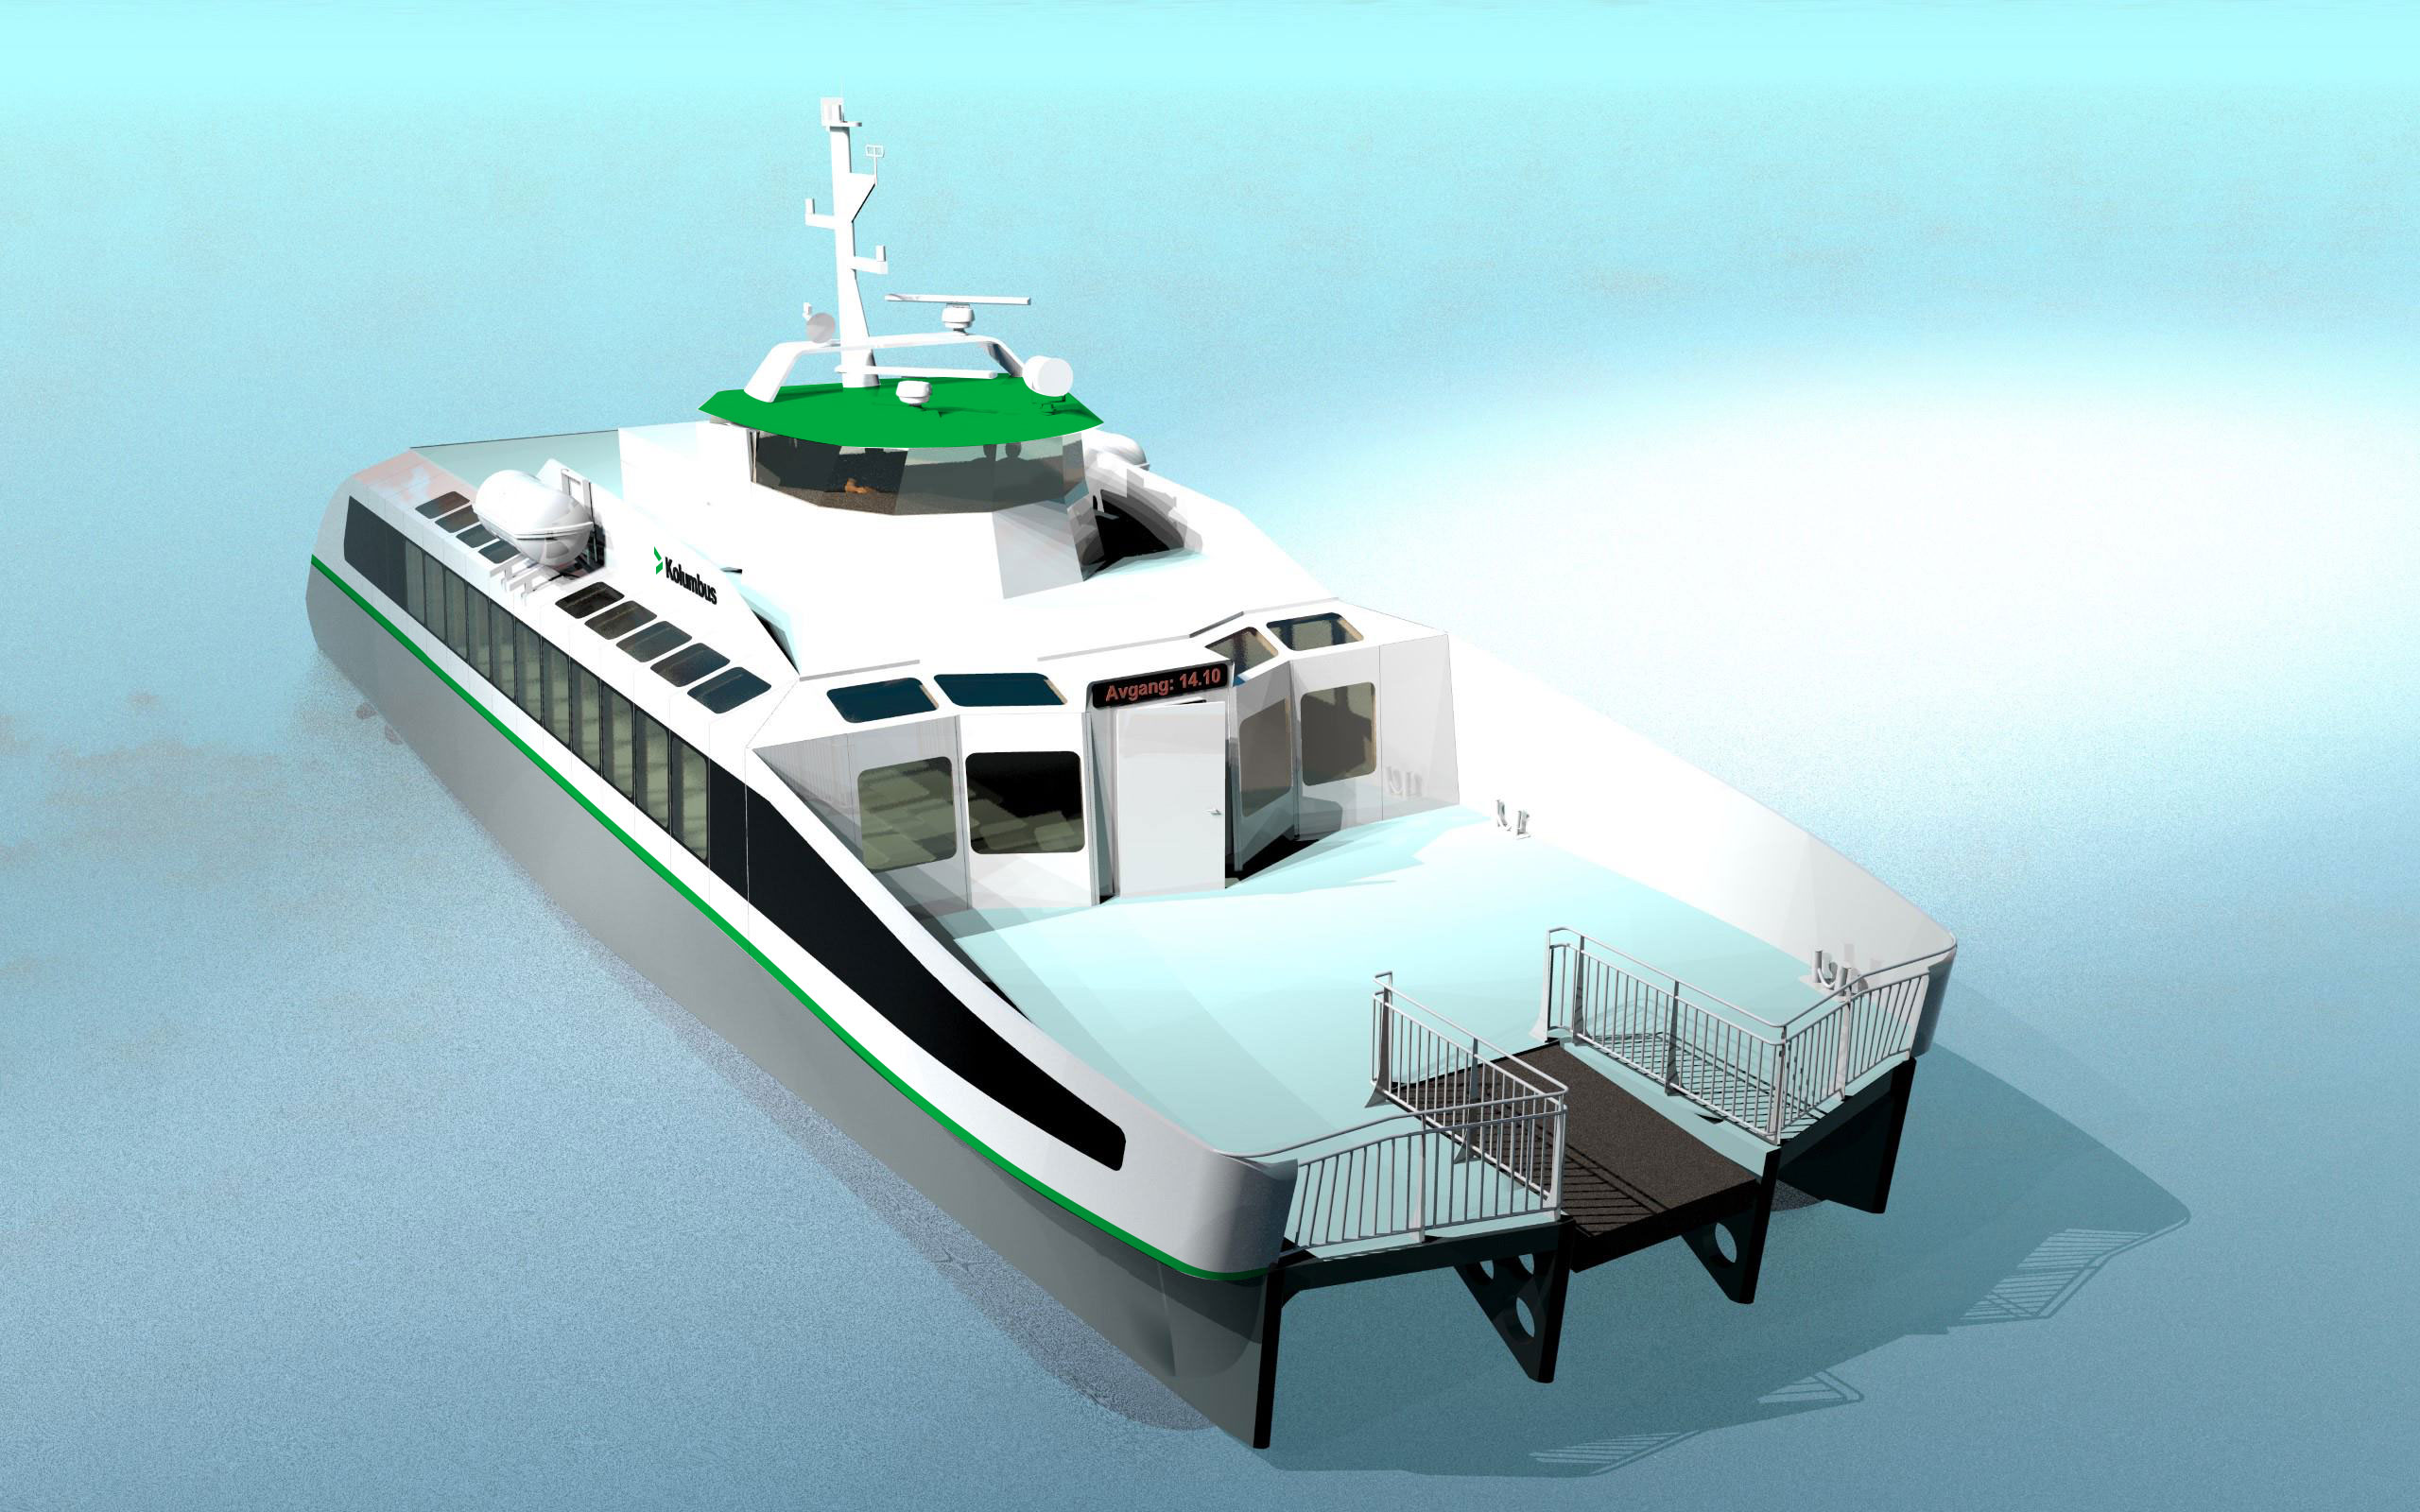 Stavanger’s zero-emission fast ferry is taking shape